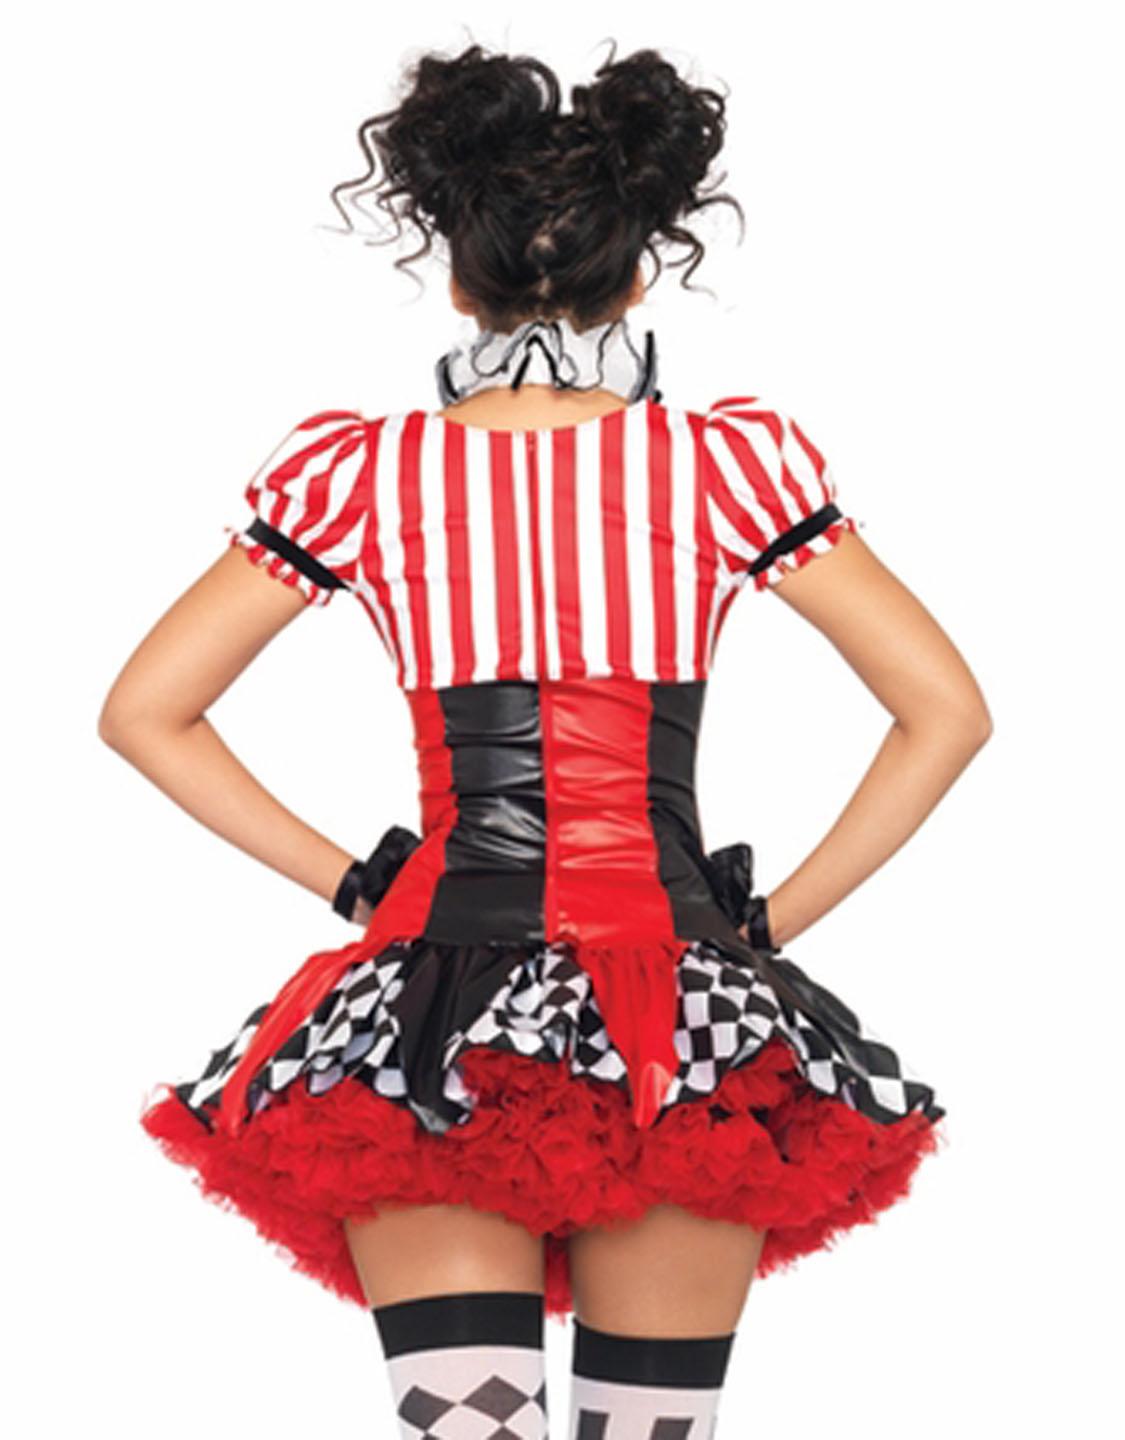 Naughty Harlequin Clown Costume Wonder Beauty Lingerie Dress Fashion Store